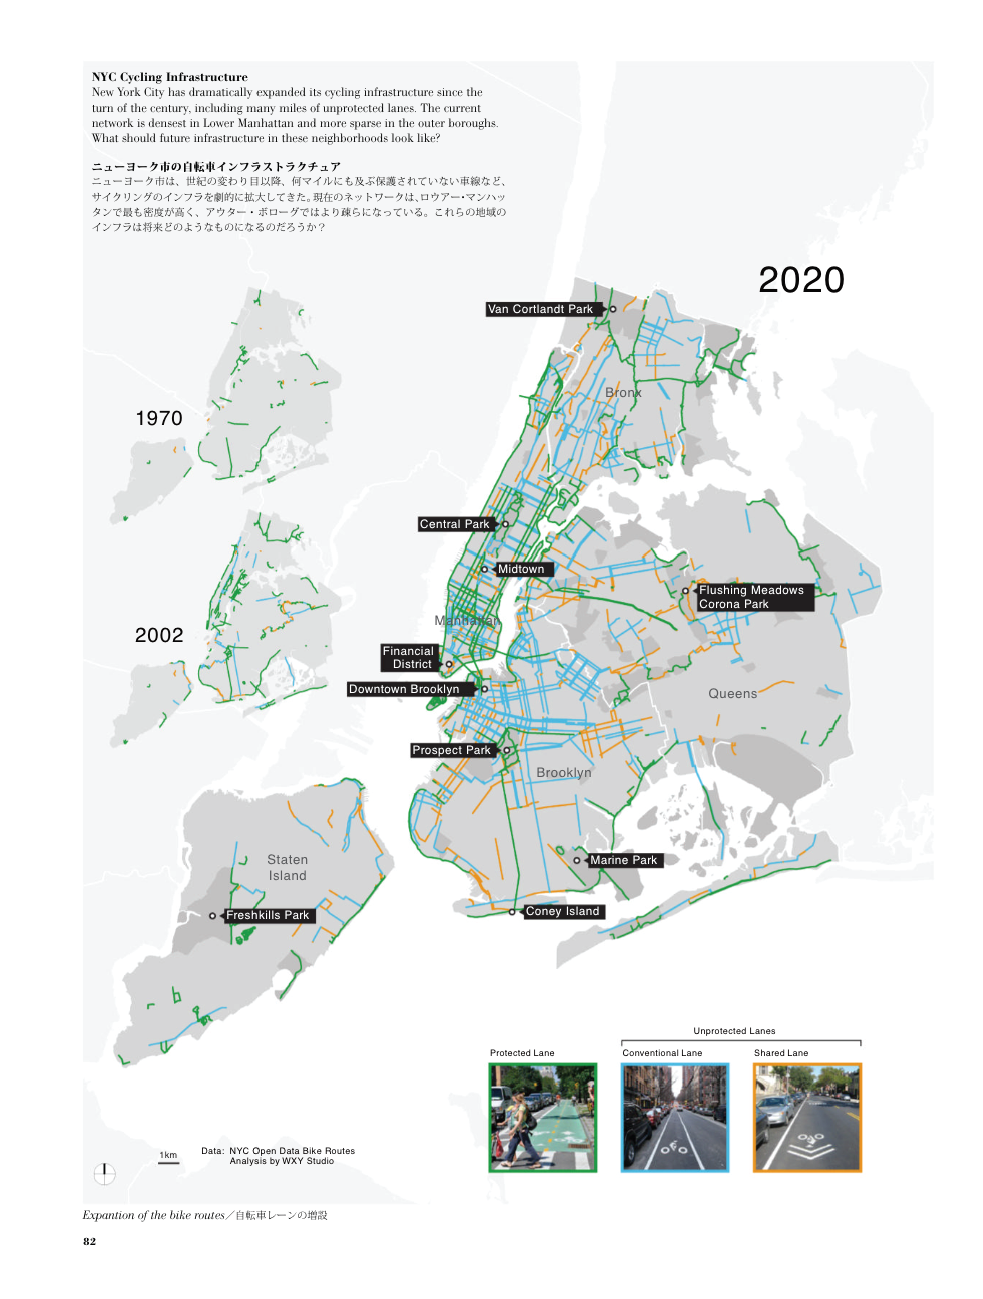 Growth in NYC's bike lane network